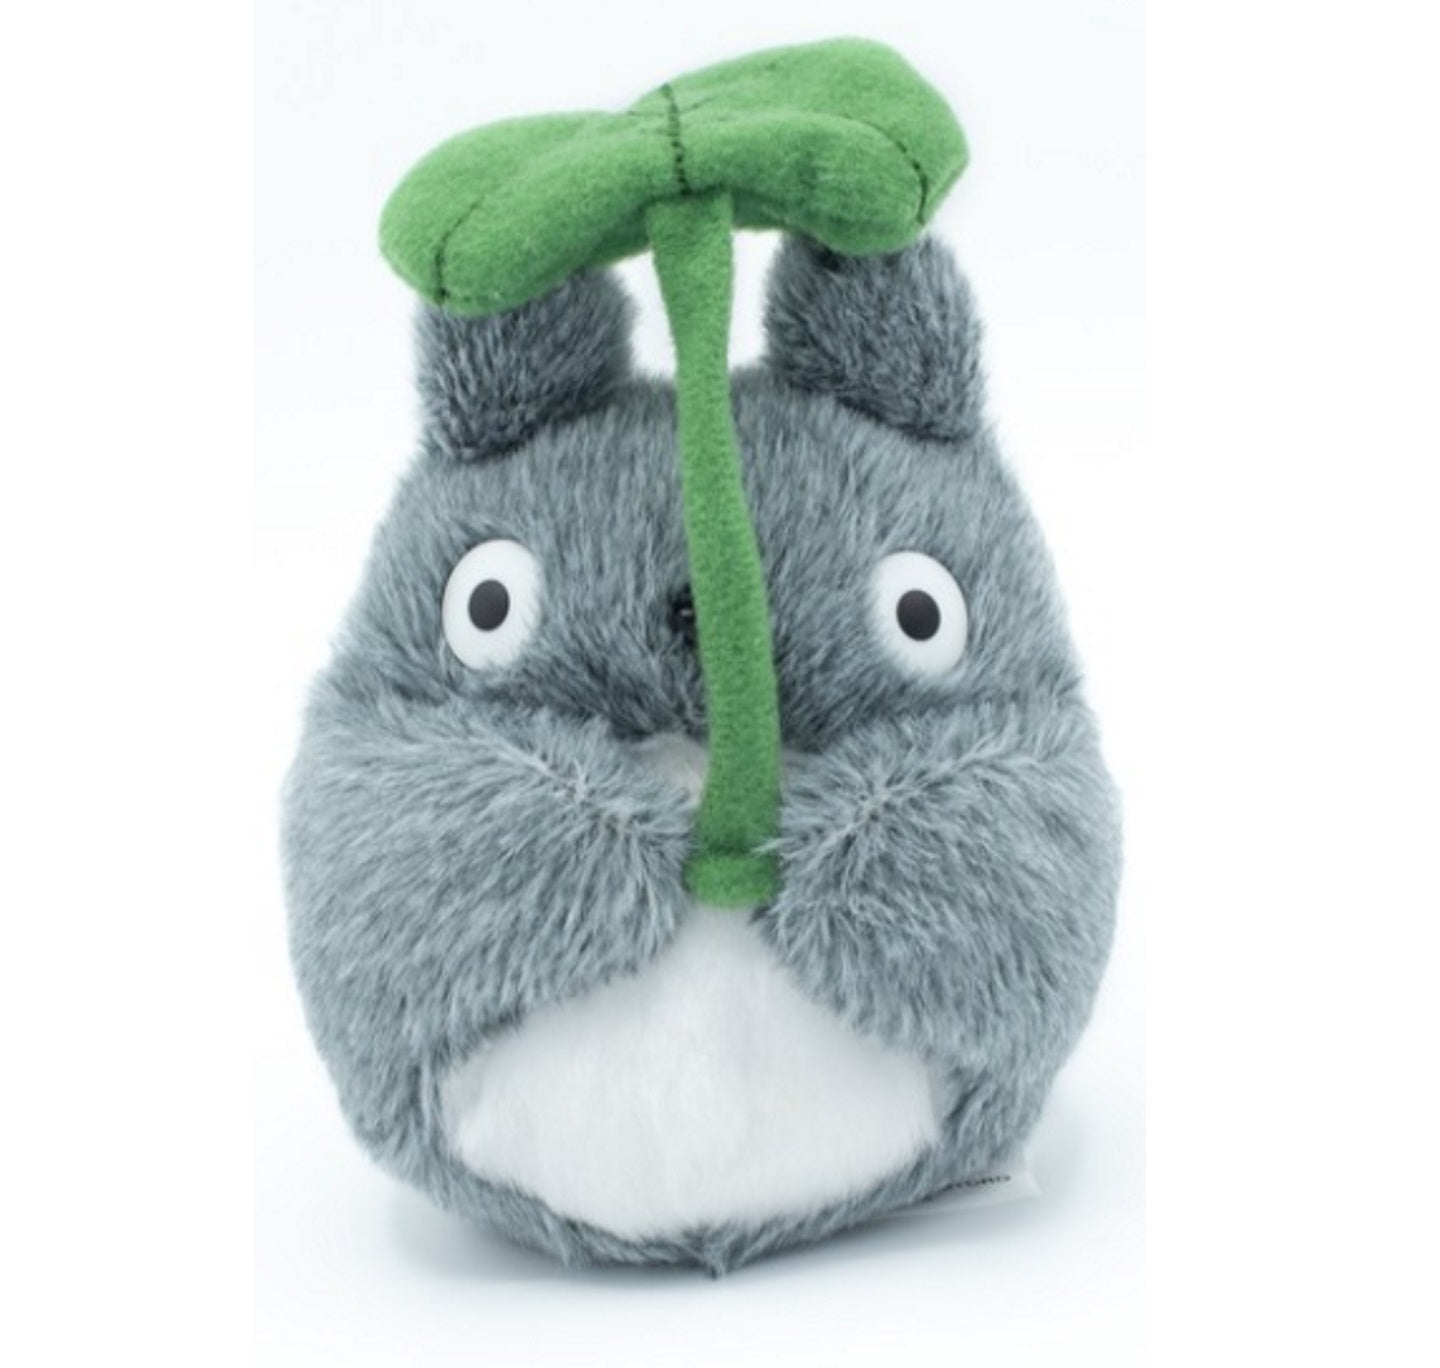 Totoro Leaf Plush - My Neighbor Totoro